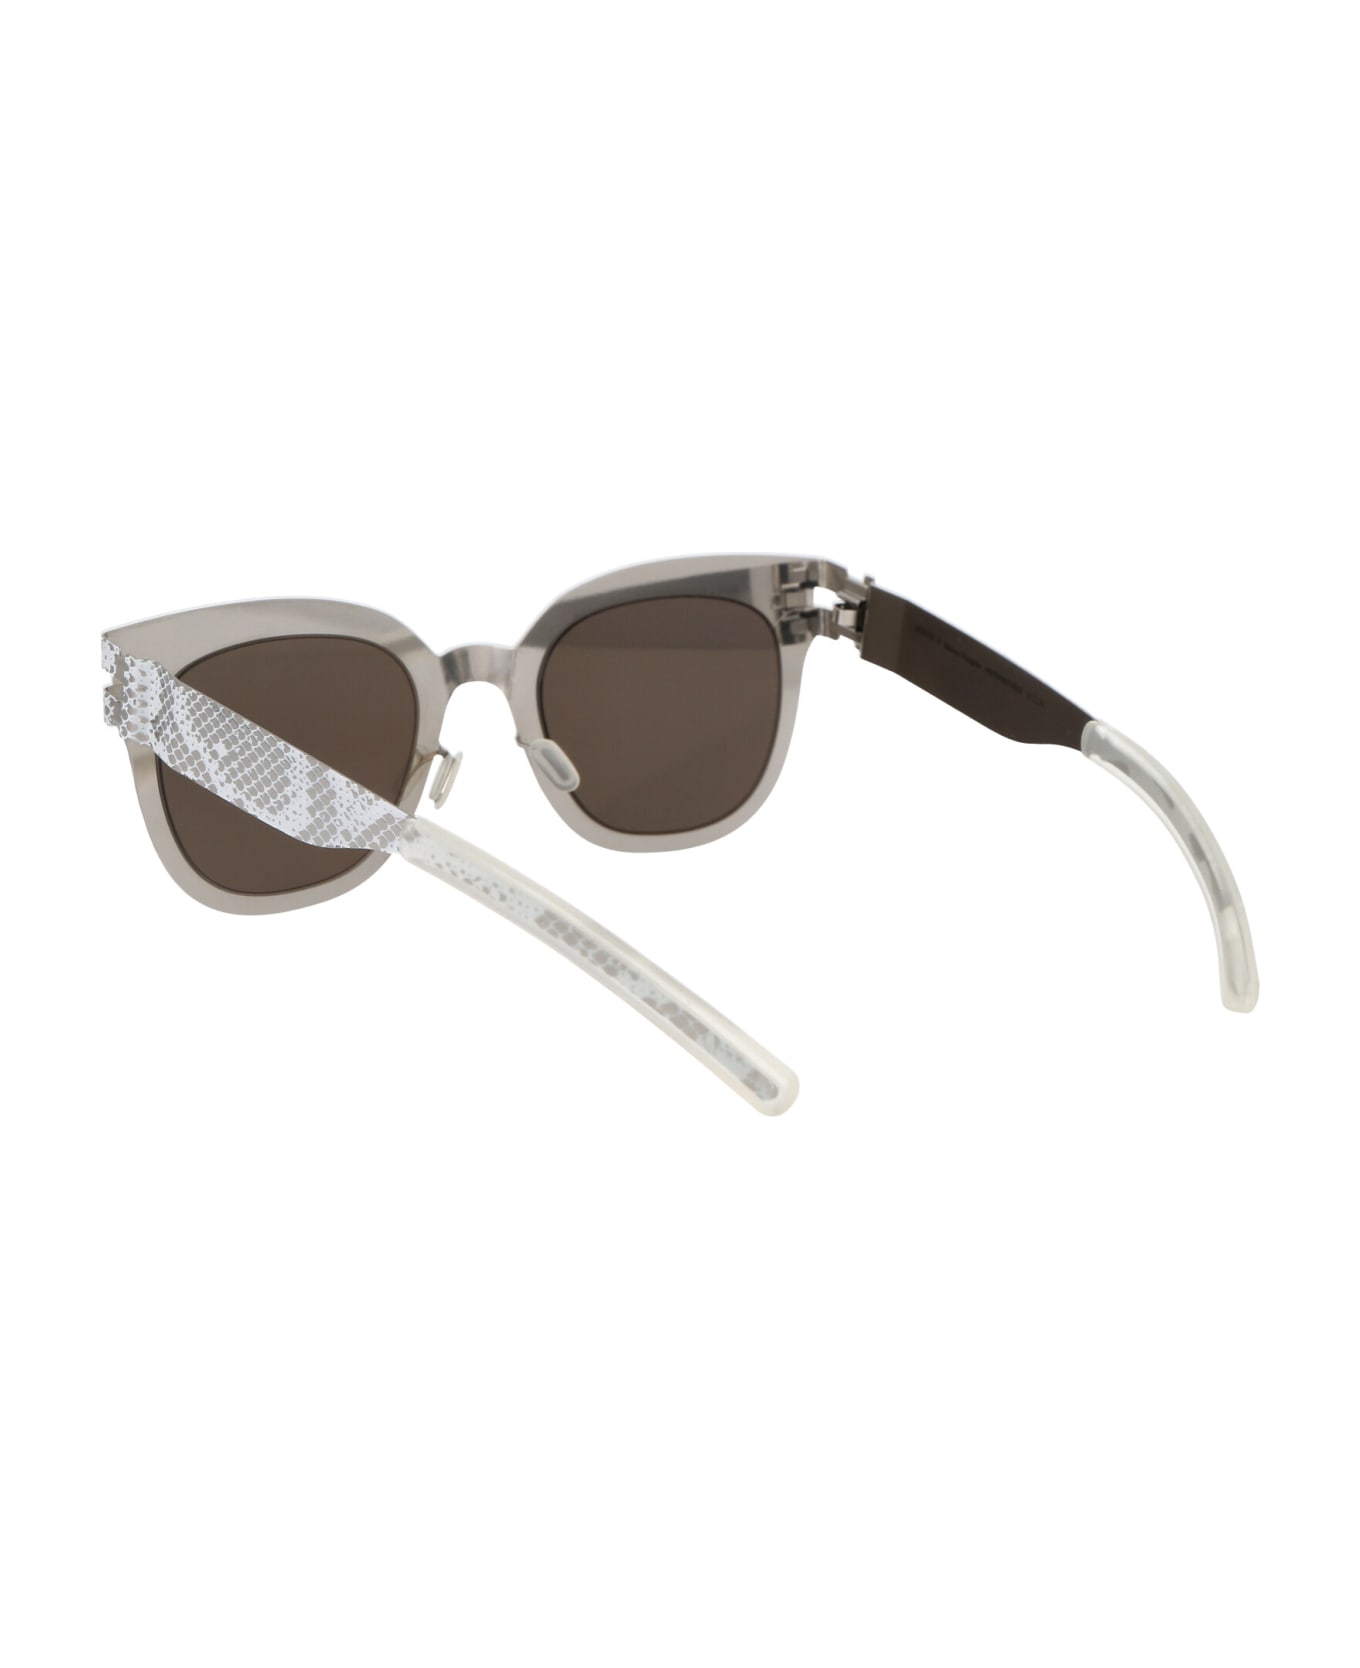 Mykita Mmtransfer002 Sunglasses - 241 Silver White Python Brown Flash